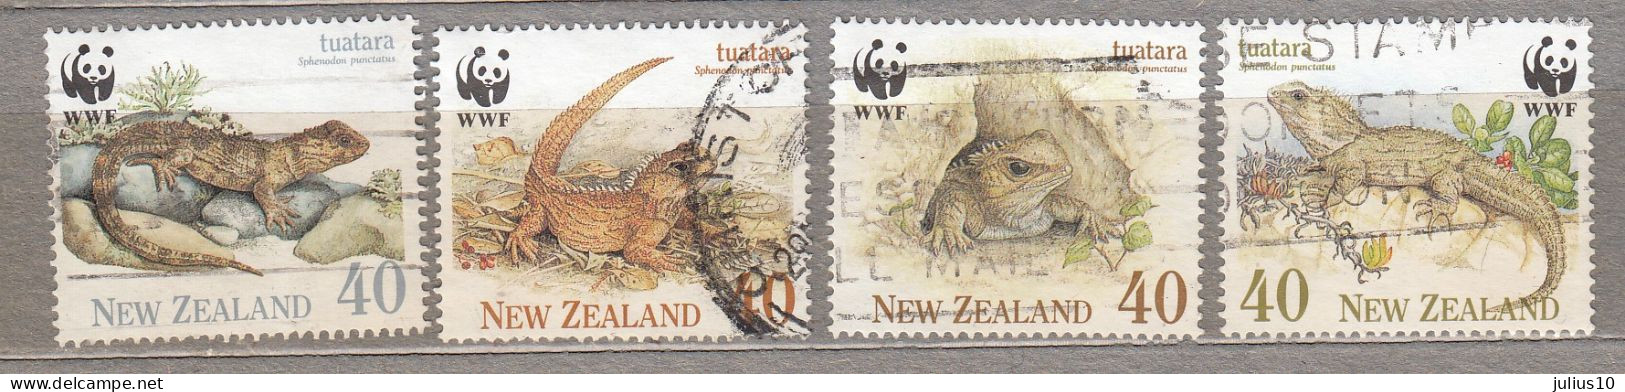 NEW ZEALAND 1991 WWF Reptiles Used(o) Mi 1160-1163   #34168 - Usati